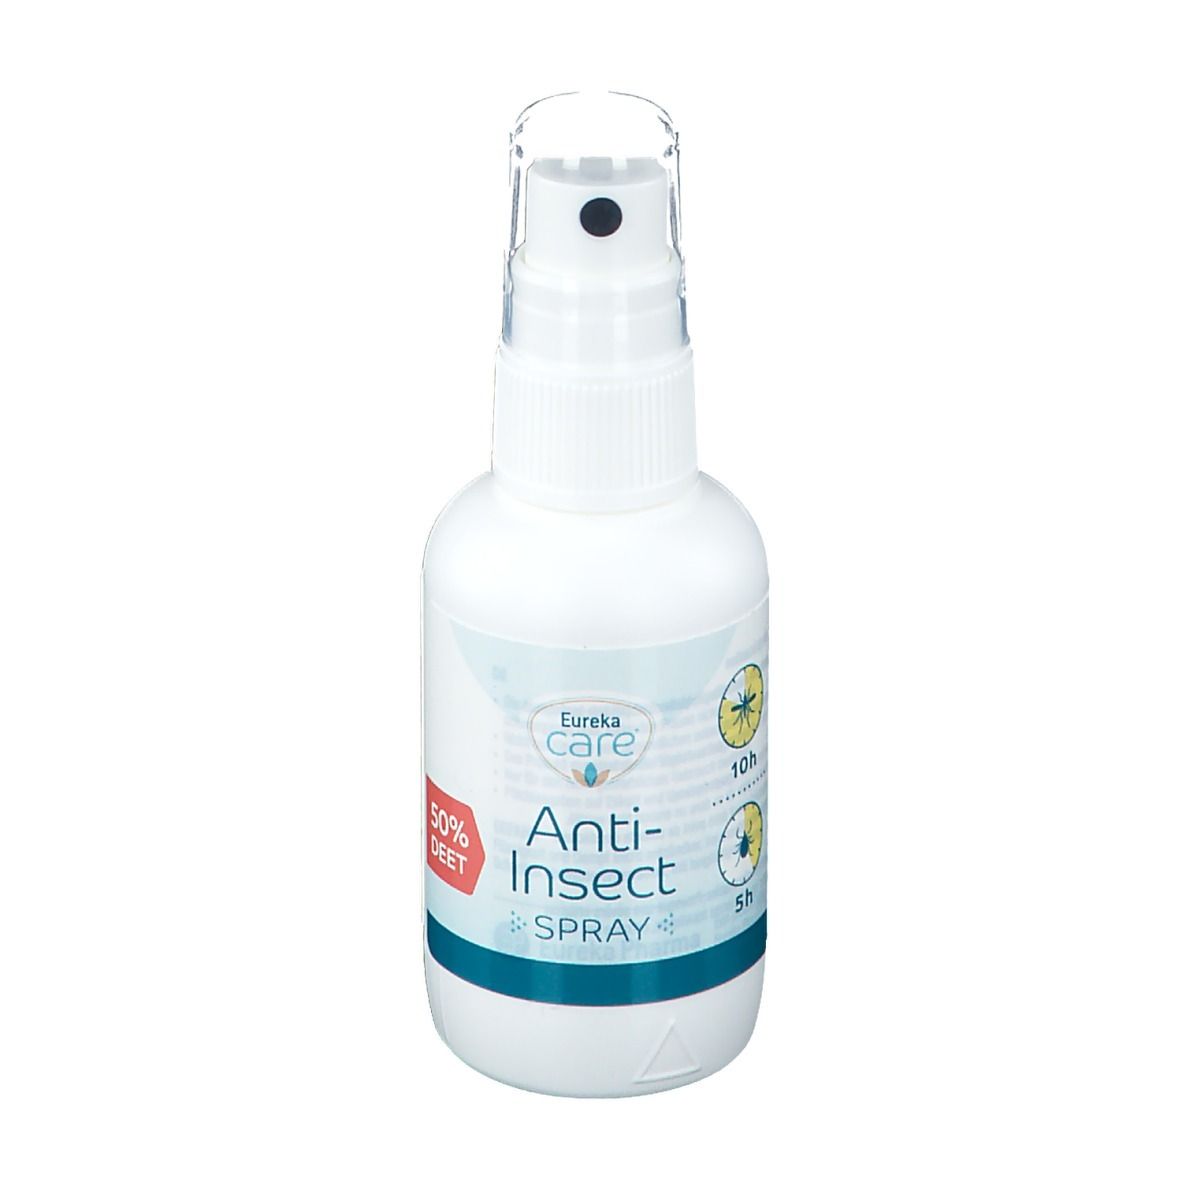 Eureka Care Anti-Insect Spray